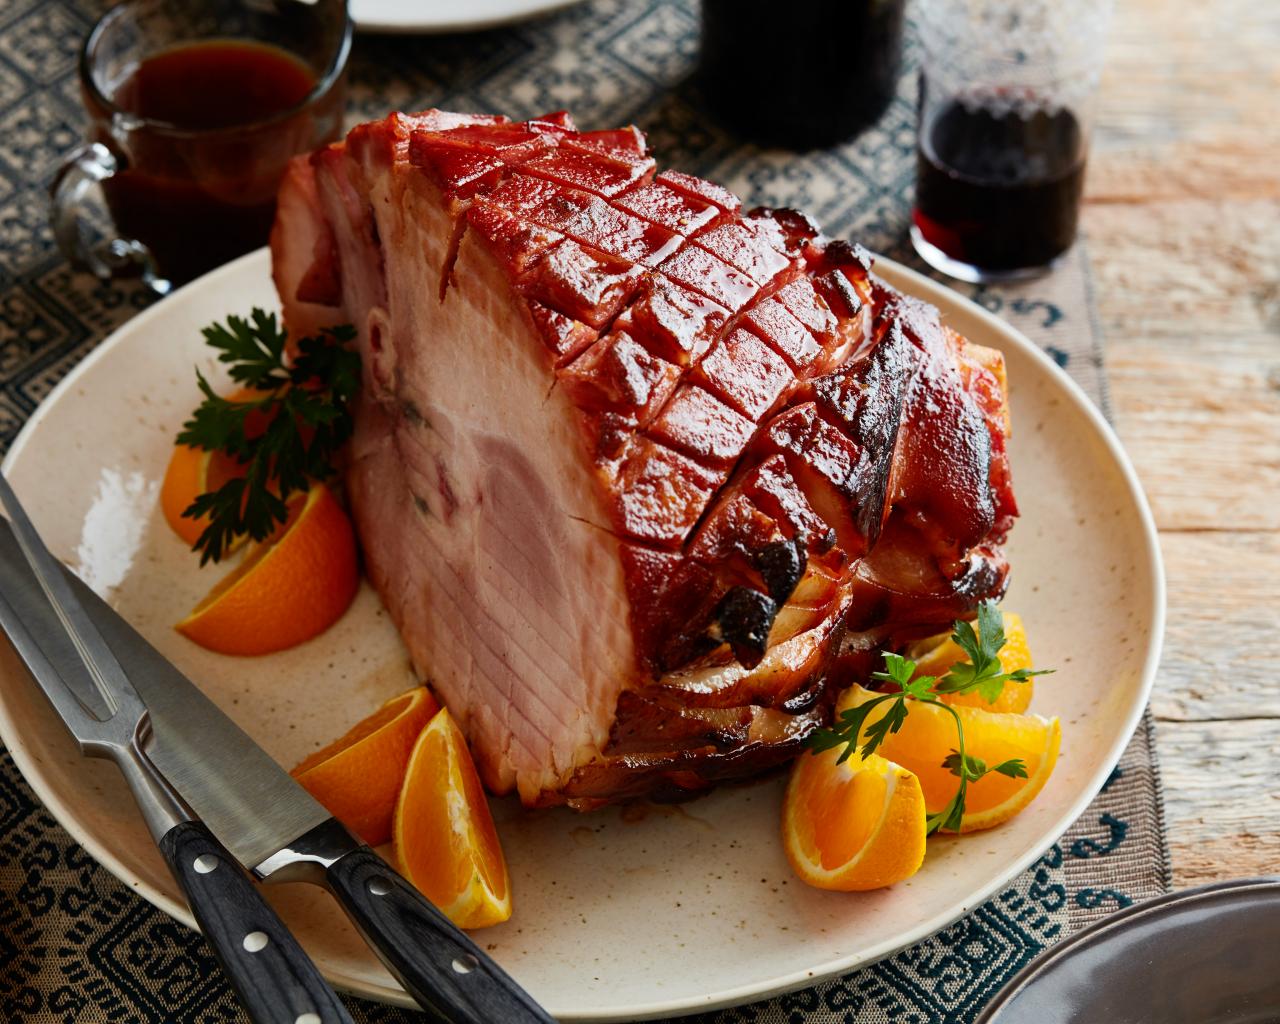 39 Best Christmas Ham Recipes - Easy Ideas For Holiday Ham